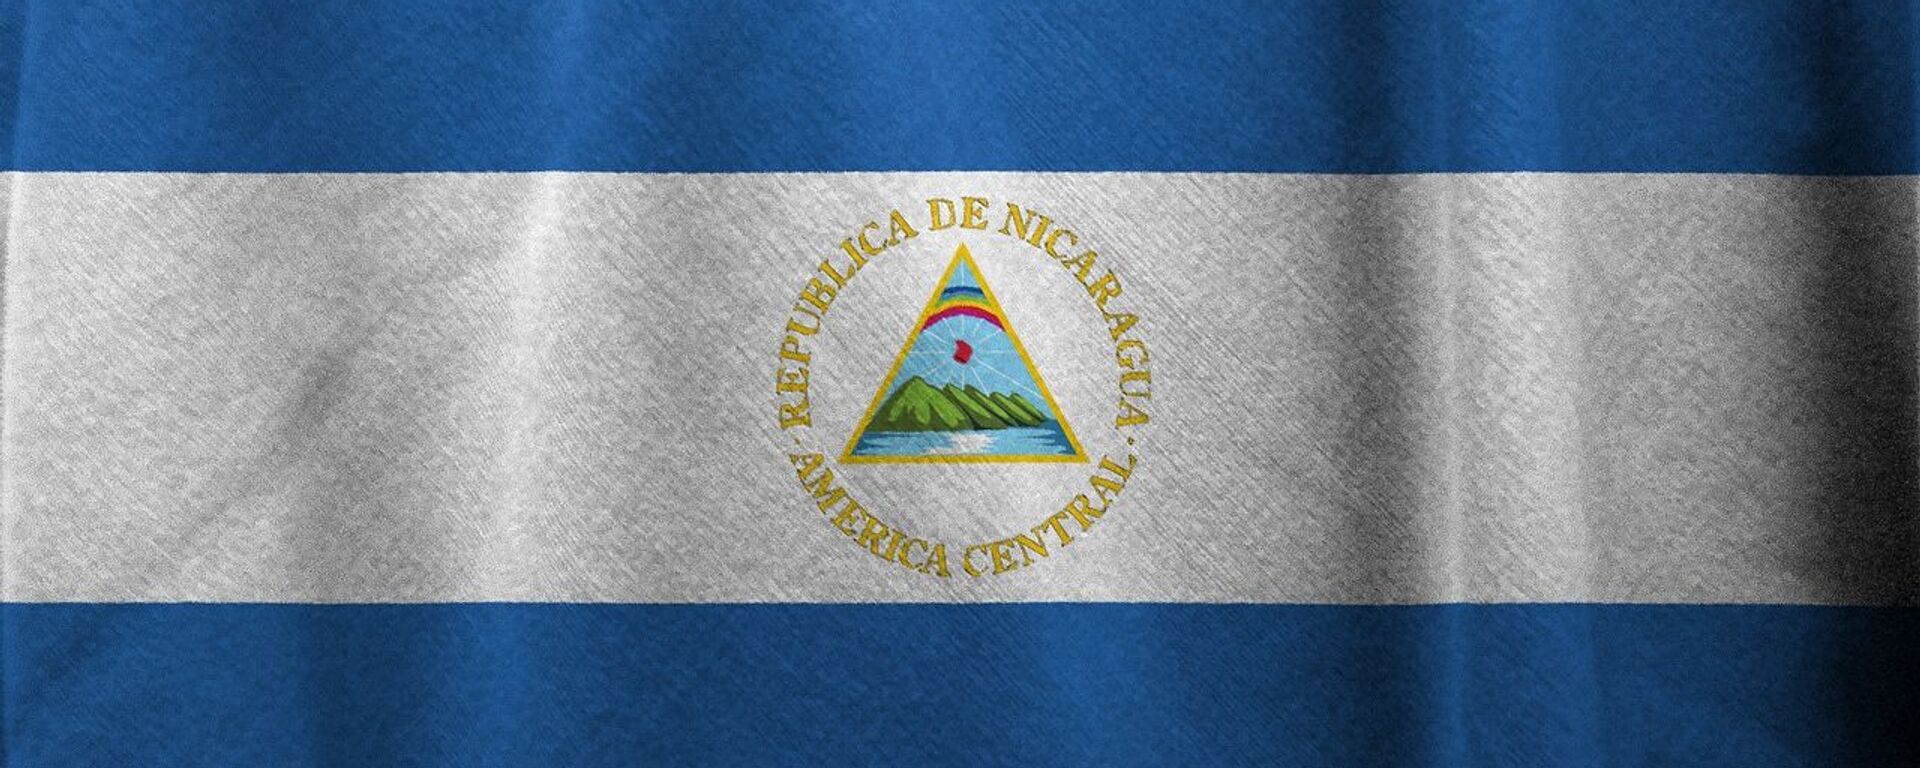 Bandera de Nicaragua - Sputnik Mundo, 1920, 18.11.2021